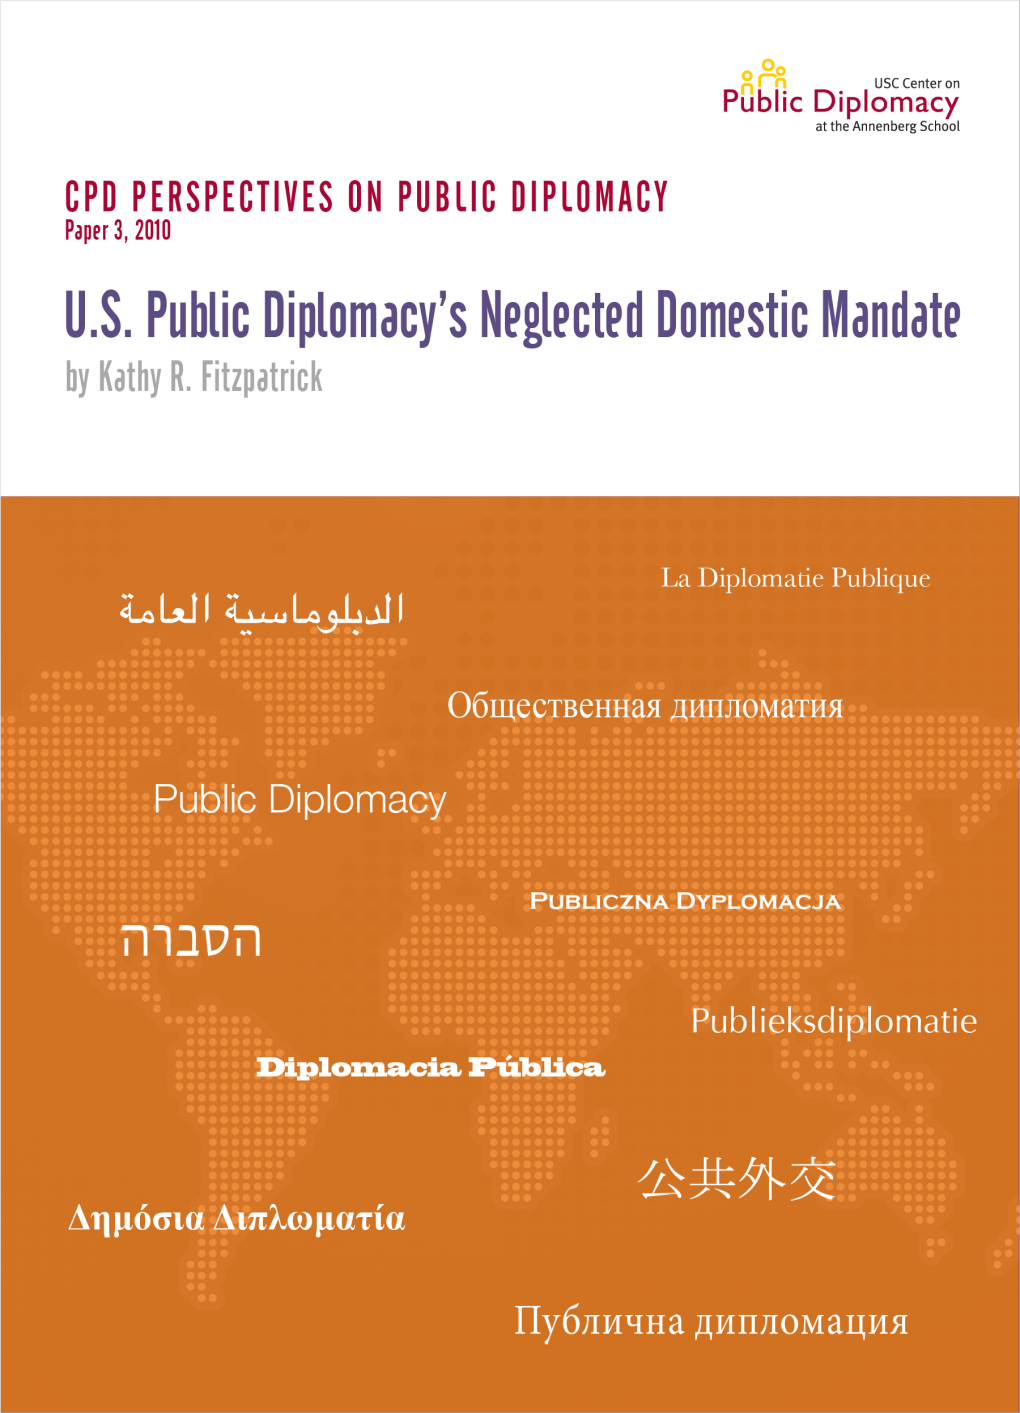 U.S. Public Diplomacy's Neglected Domestic Mandate